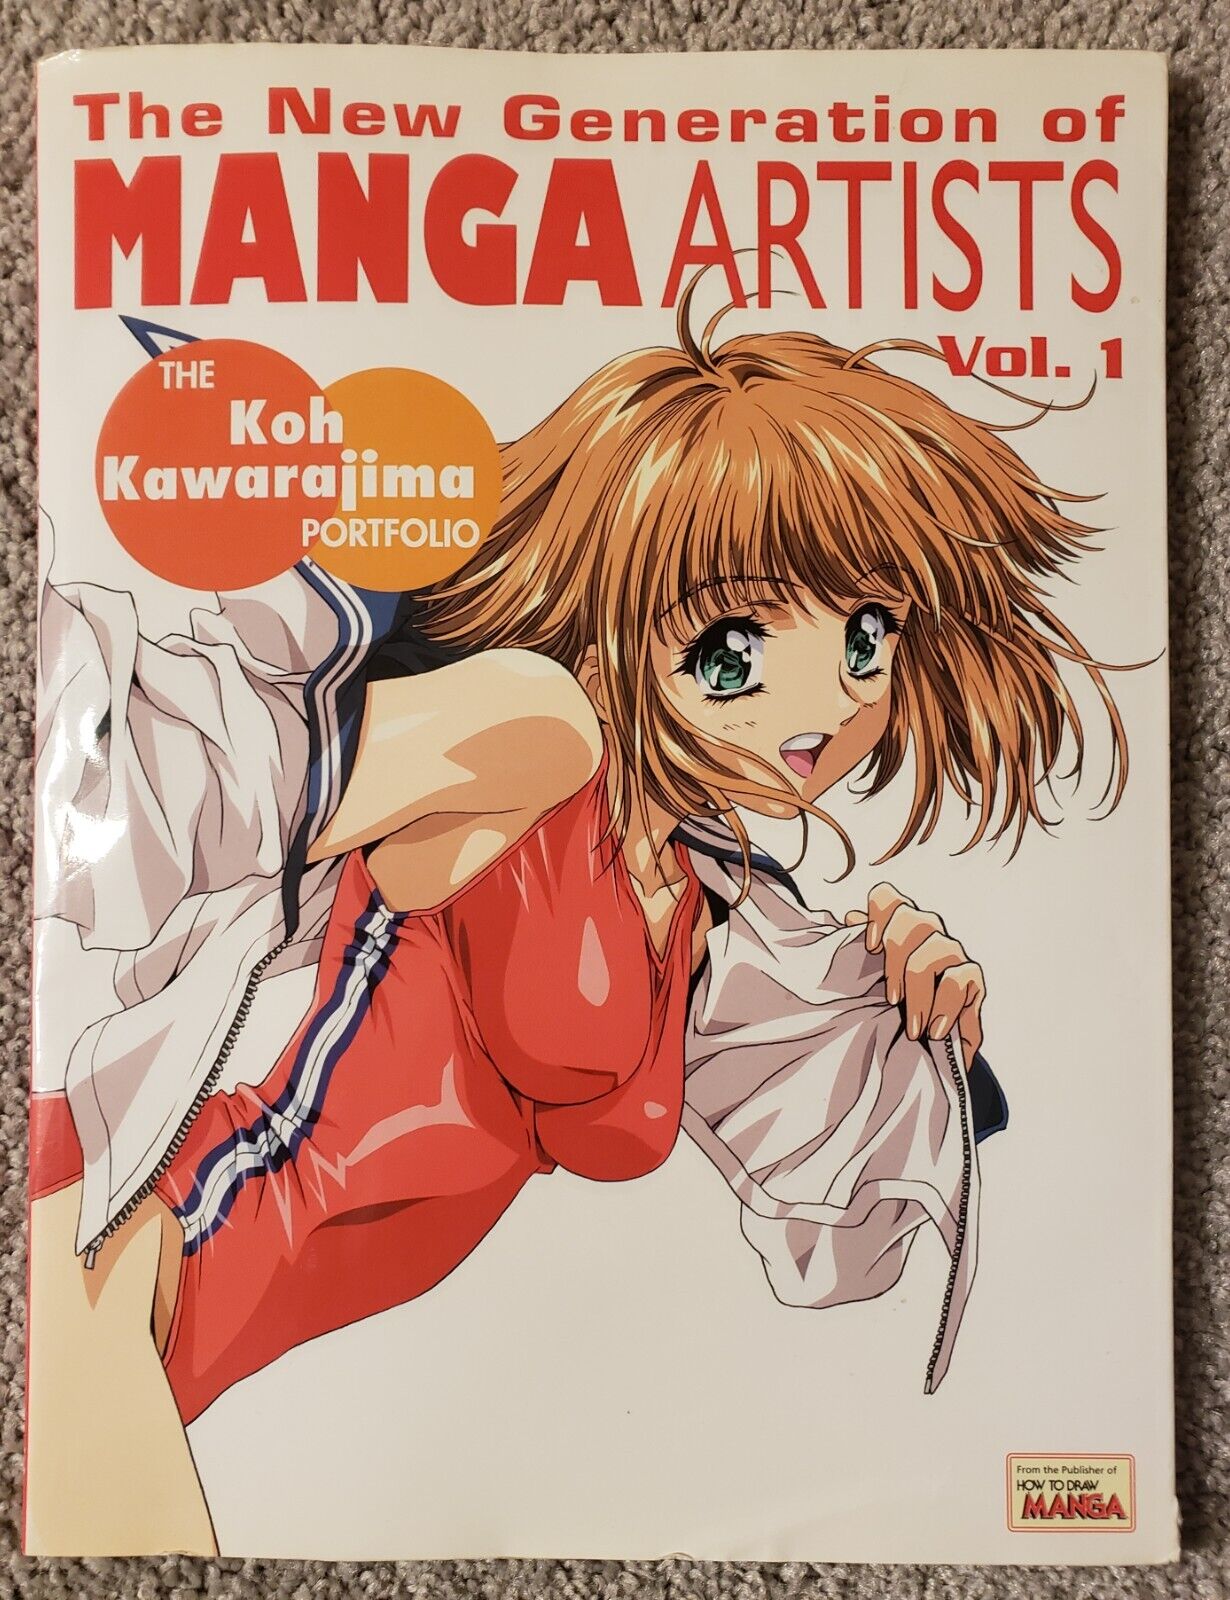 The New Generation of Manga Artists Vol. 1: The Koh Kawarajima Portfolio Book